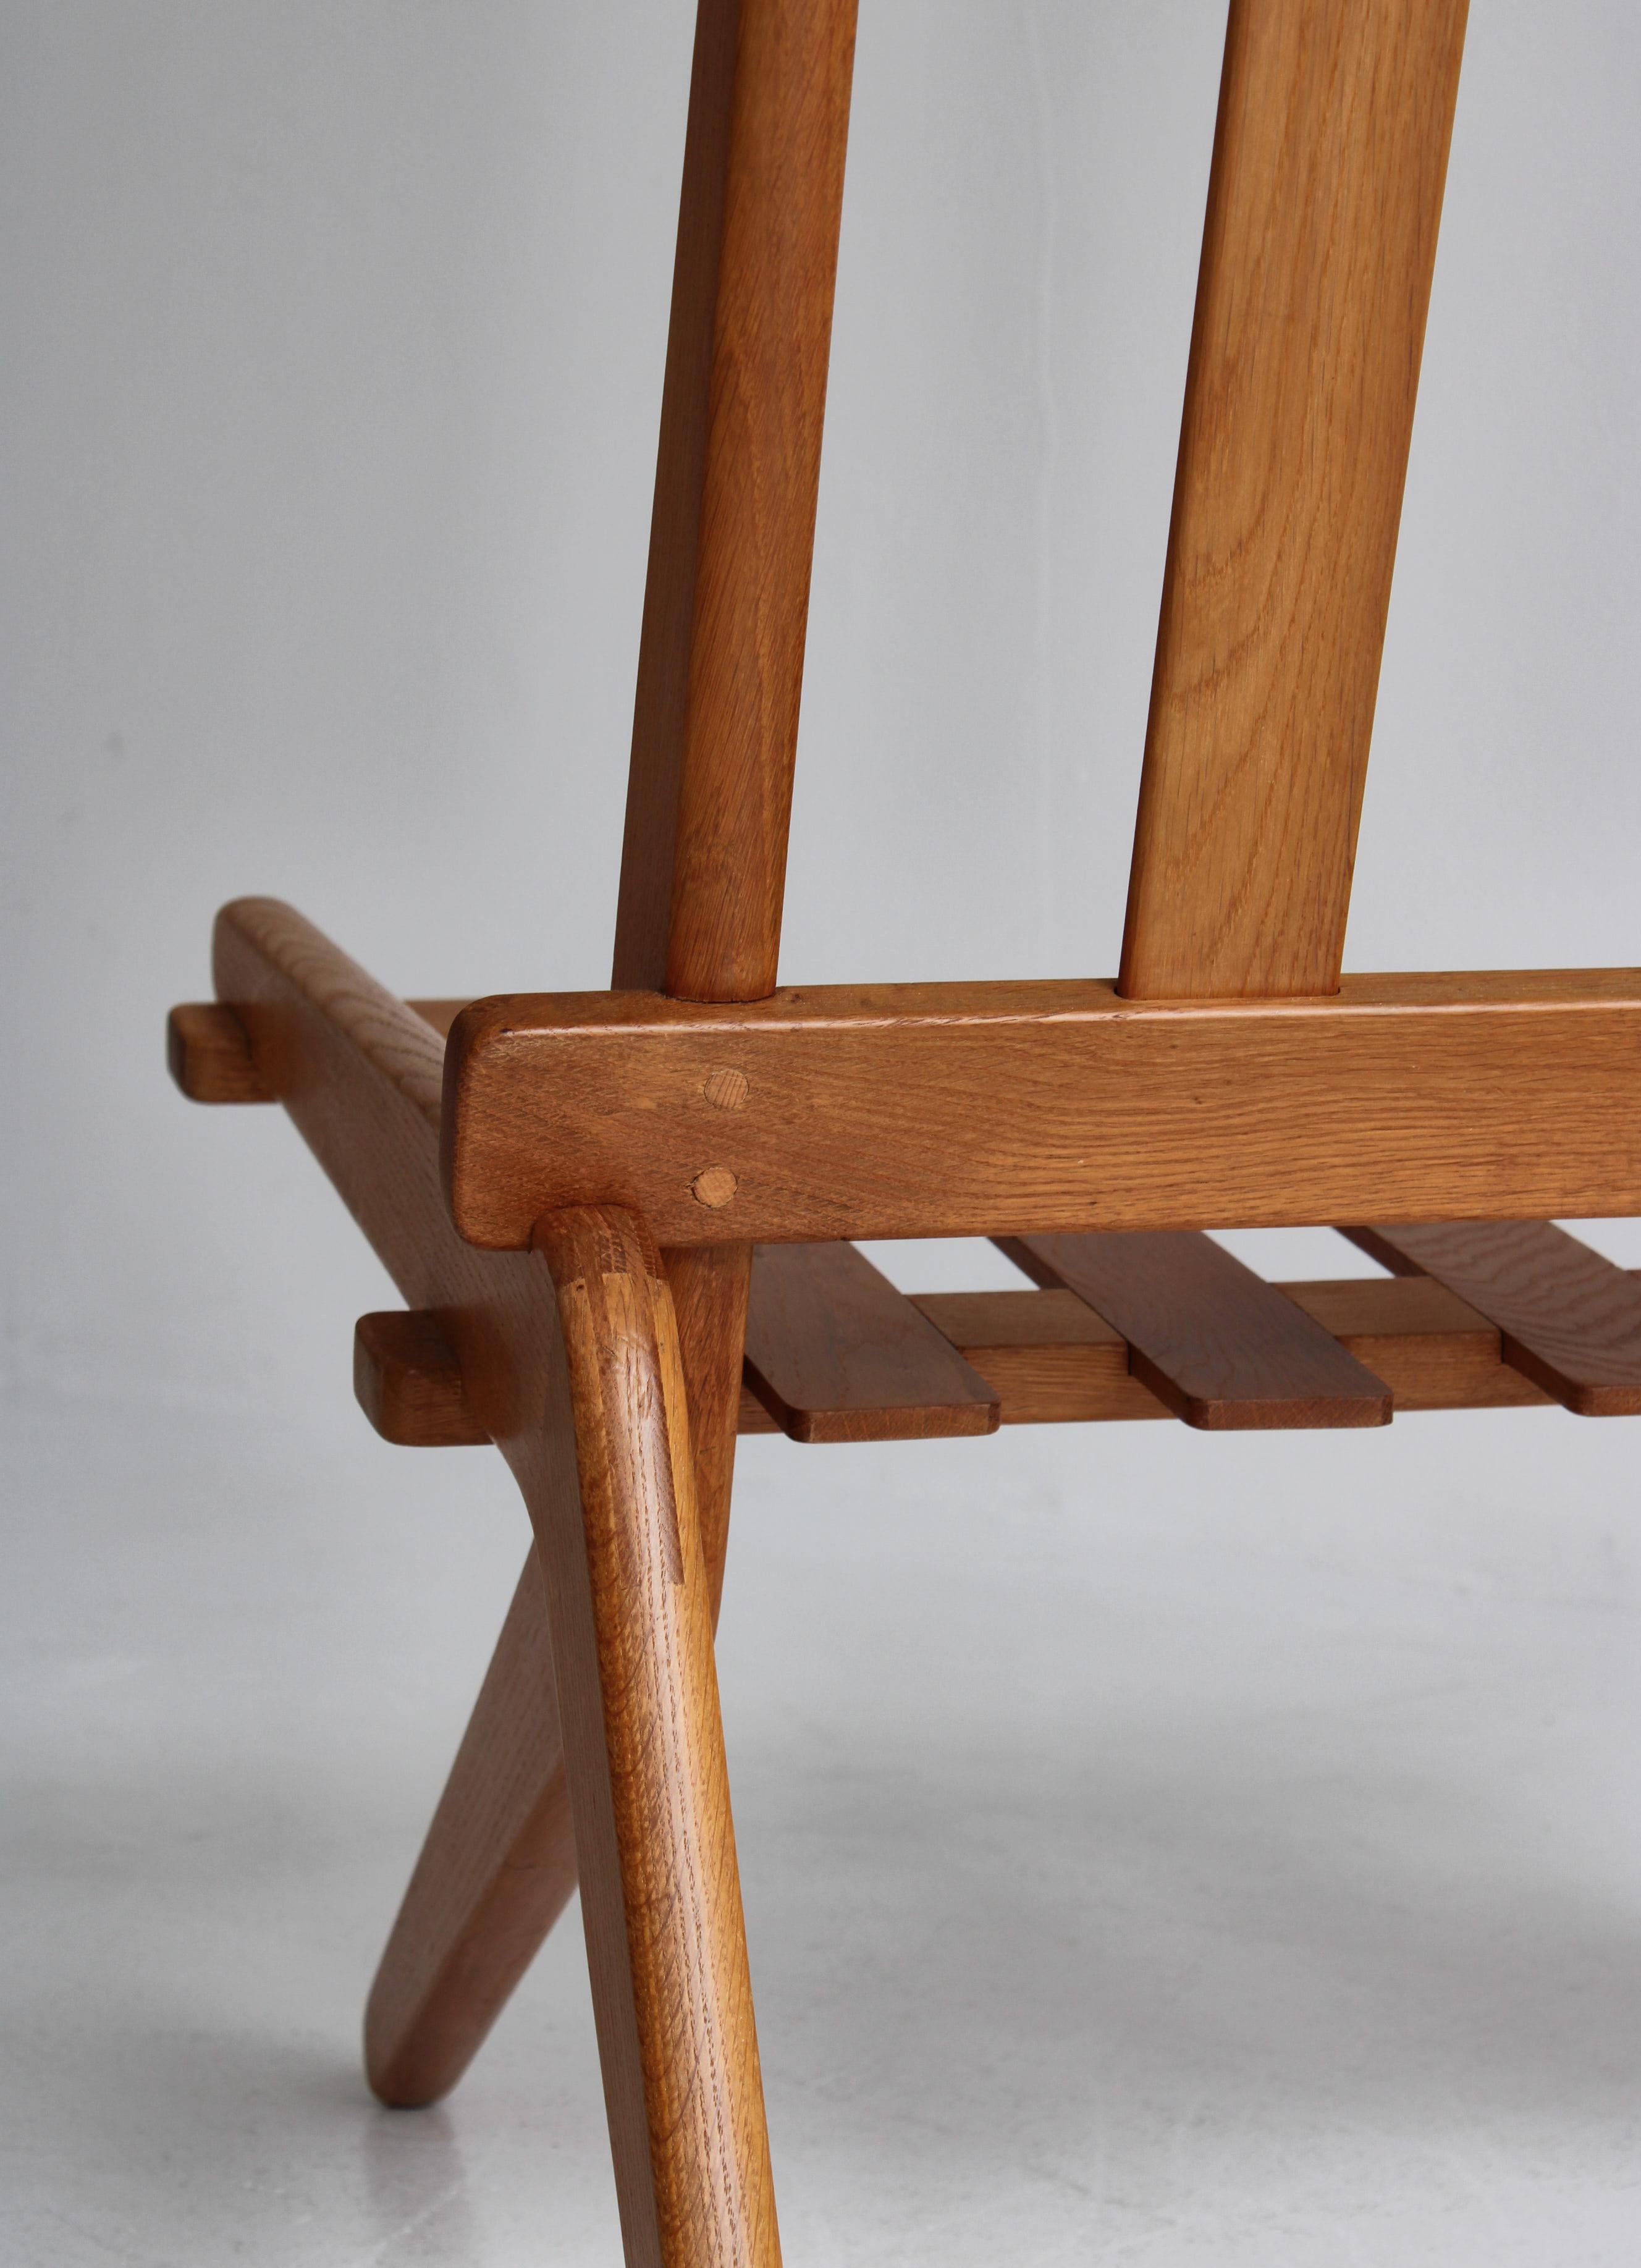 Danish Modern Folding Chair in Oak and Natural Sheepskin, Preben Thorsen, 1950s For Sale 9